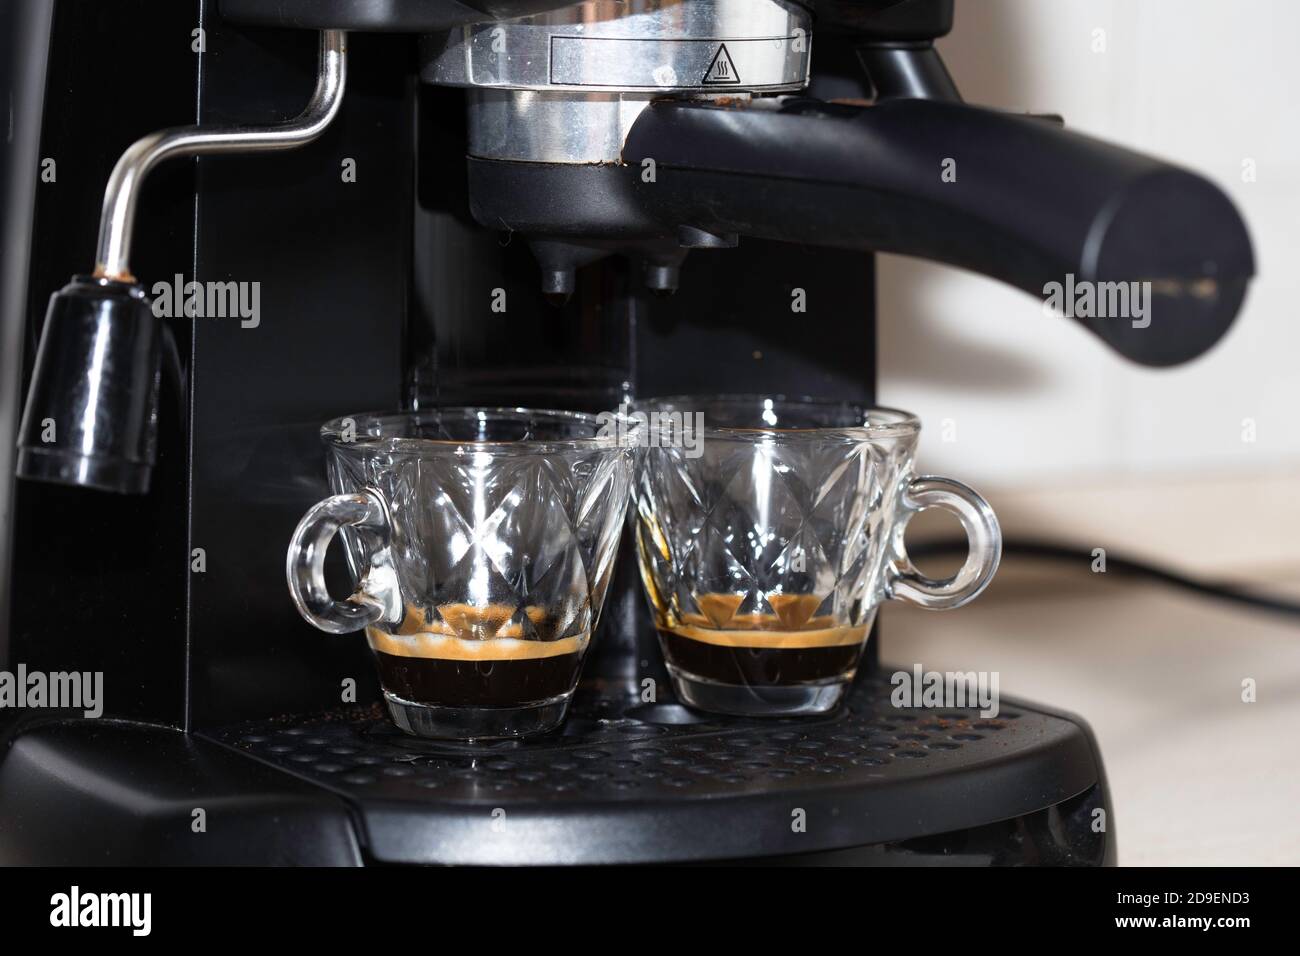 https://c8.alamy.com/comp/2D9END3/process-of-making-two-espresso-shots-using-espresso-machine-italian-coffee-2D9END3.jpg